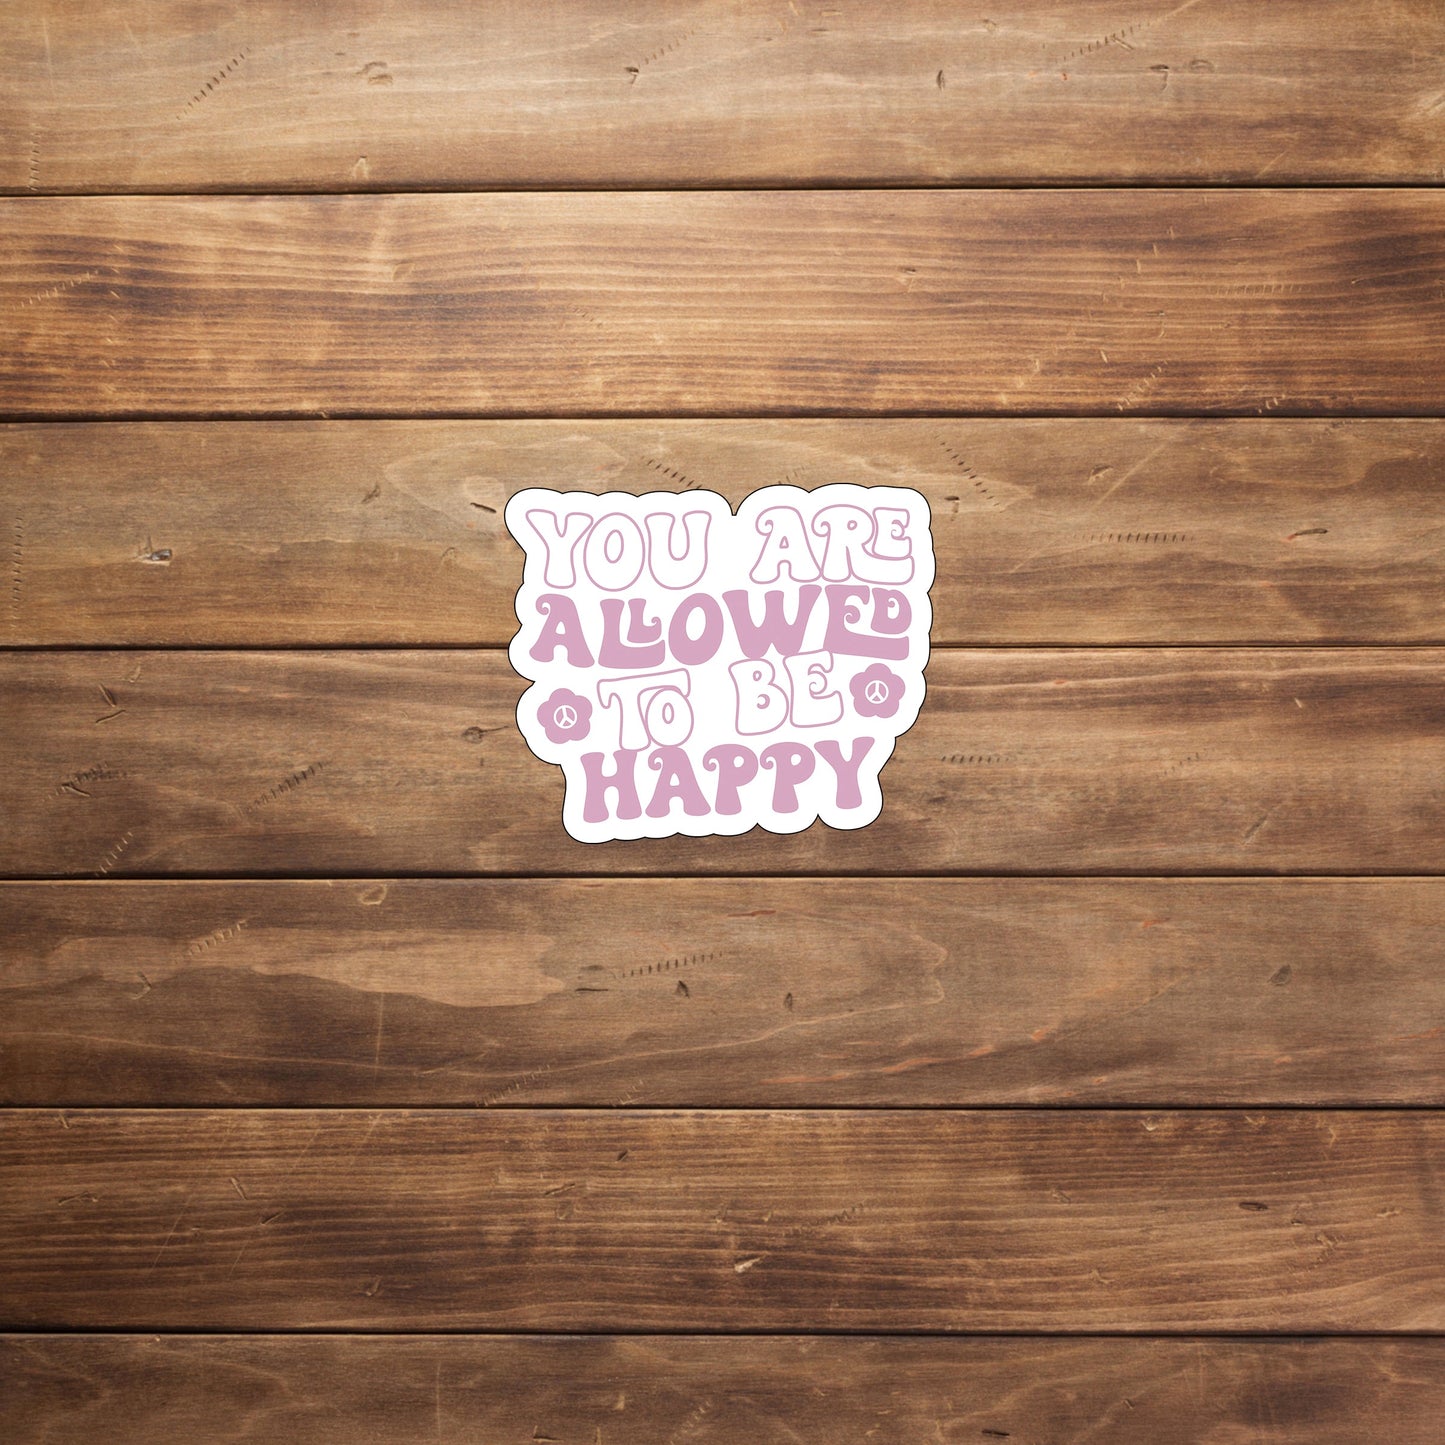 You are allowed to be happy  Sticker,  Vinyl sticker, laptop sticker, Tablet sticker